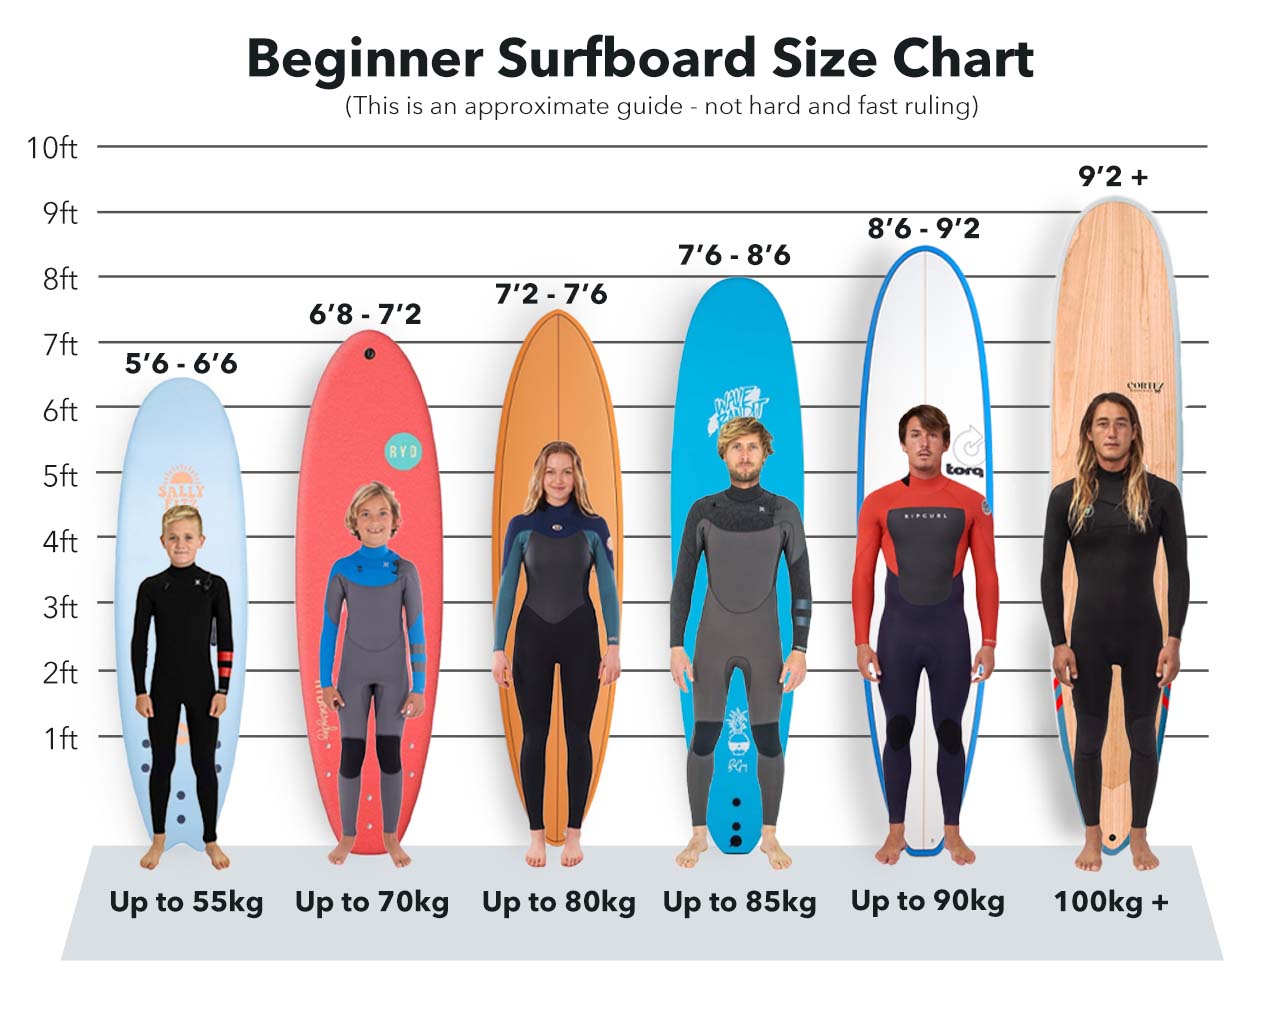 Beginner Surfboard Size Guide